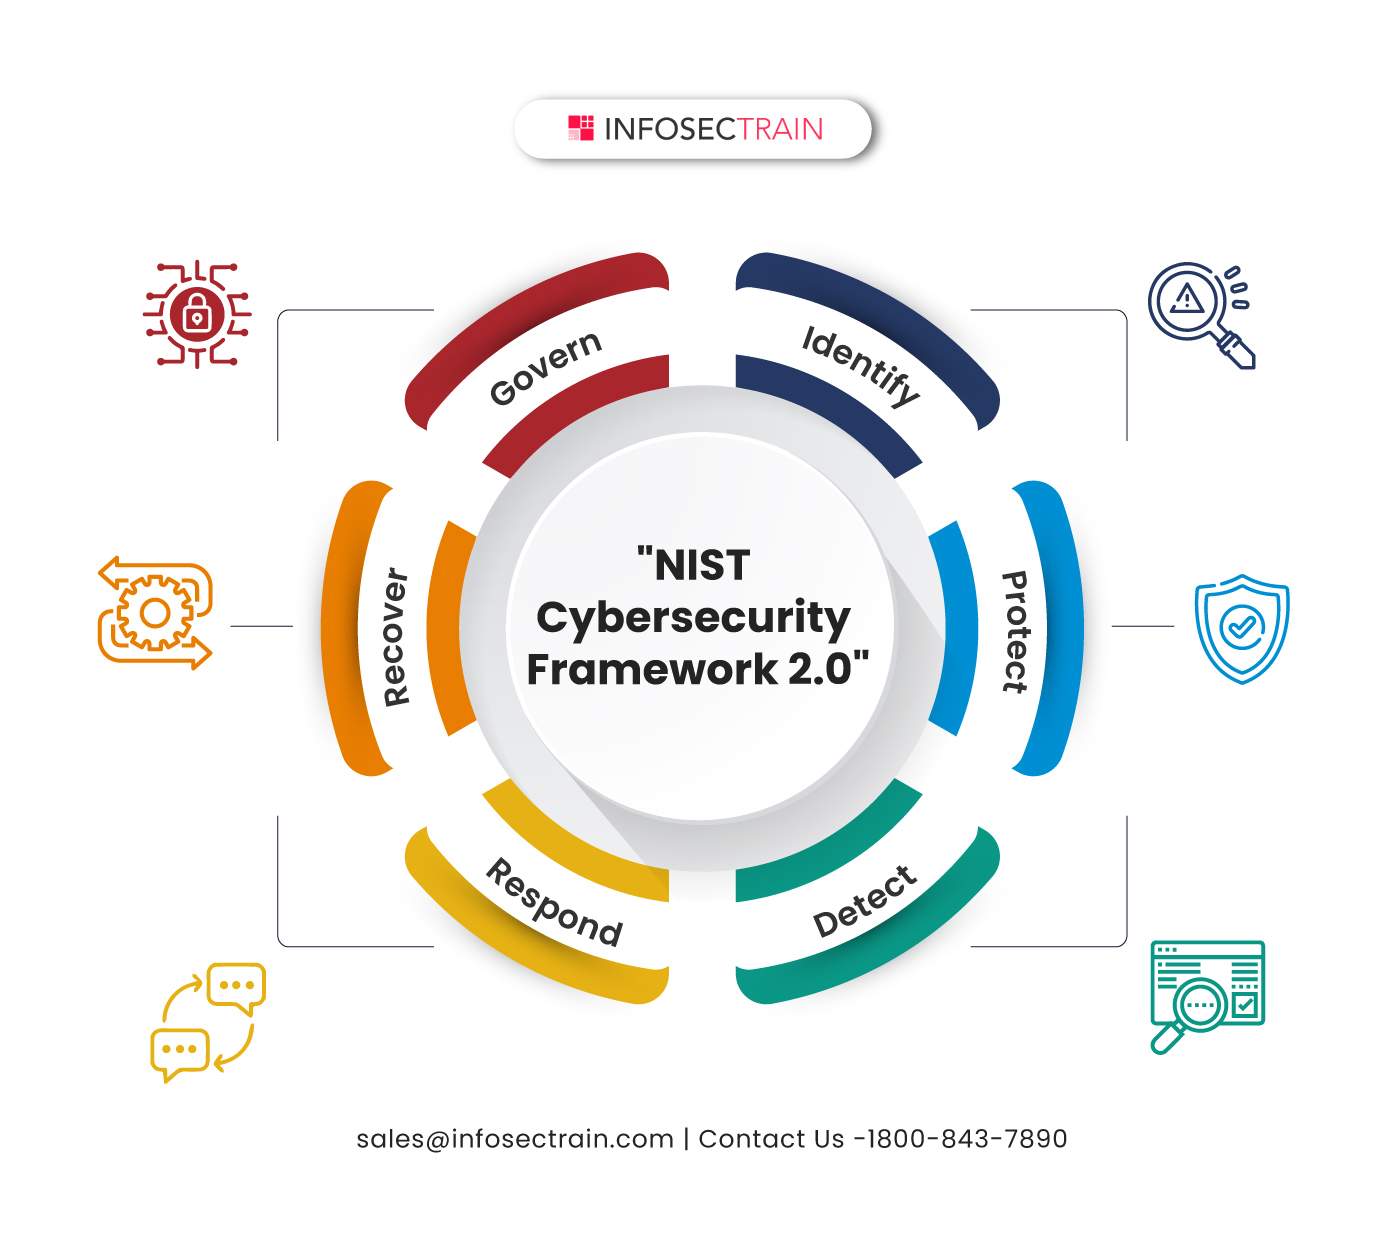 NIST Cybersecurity Framework 2.0 